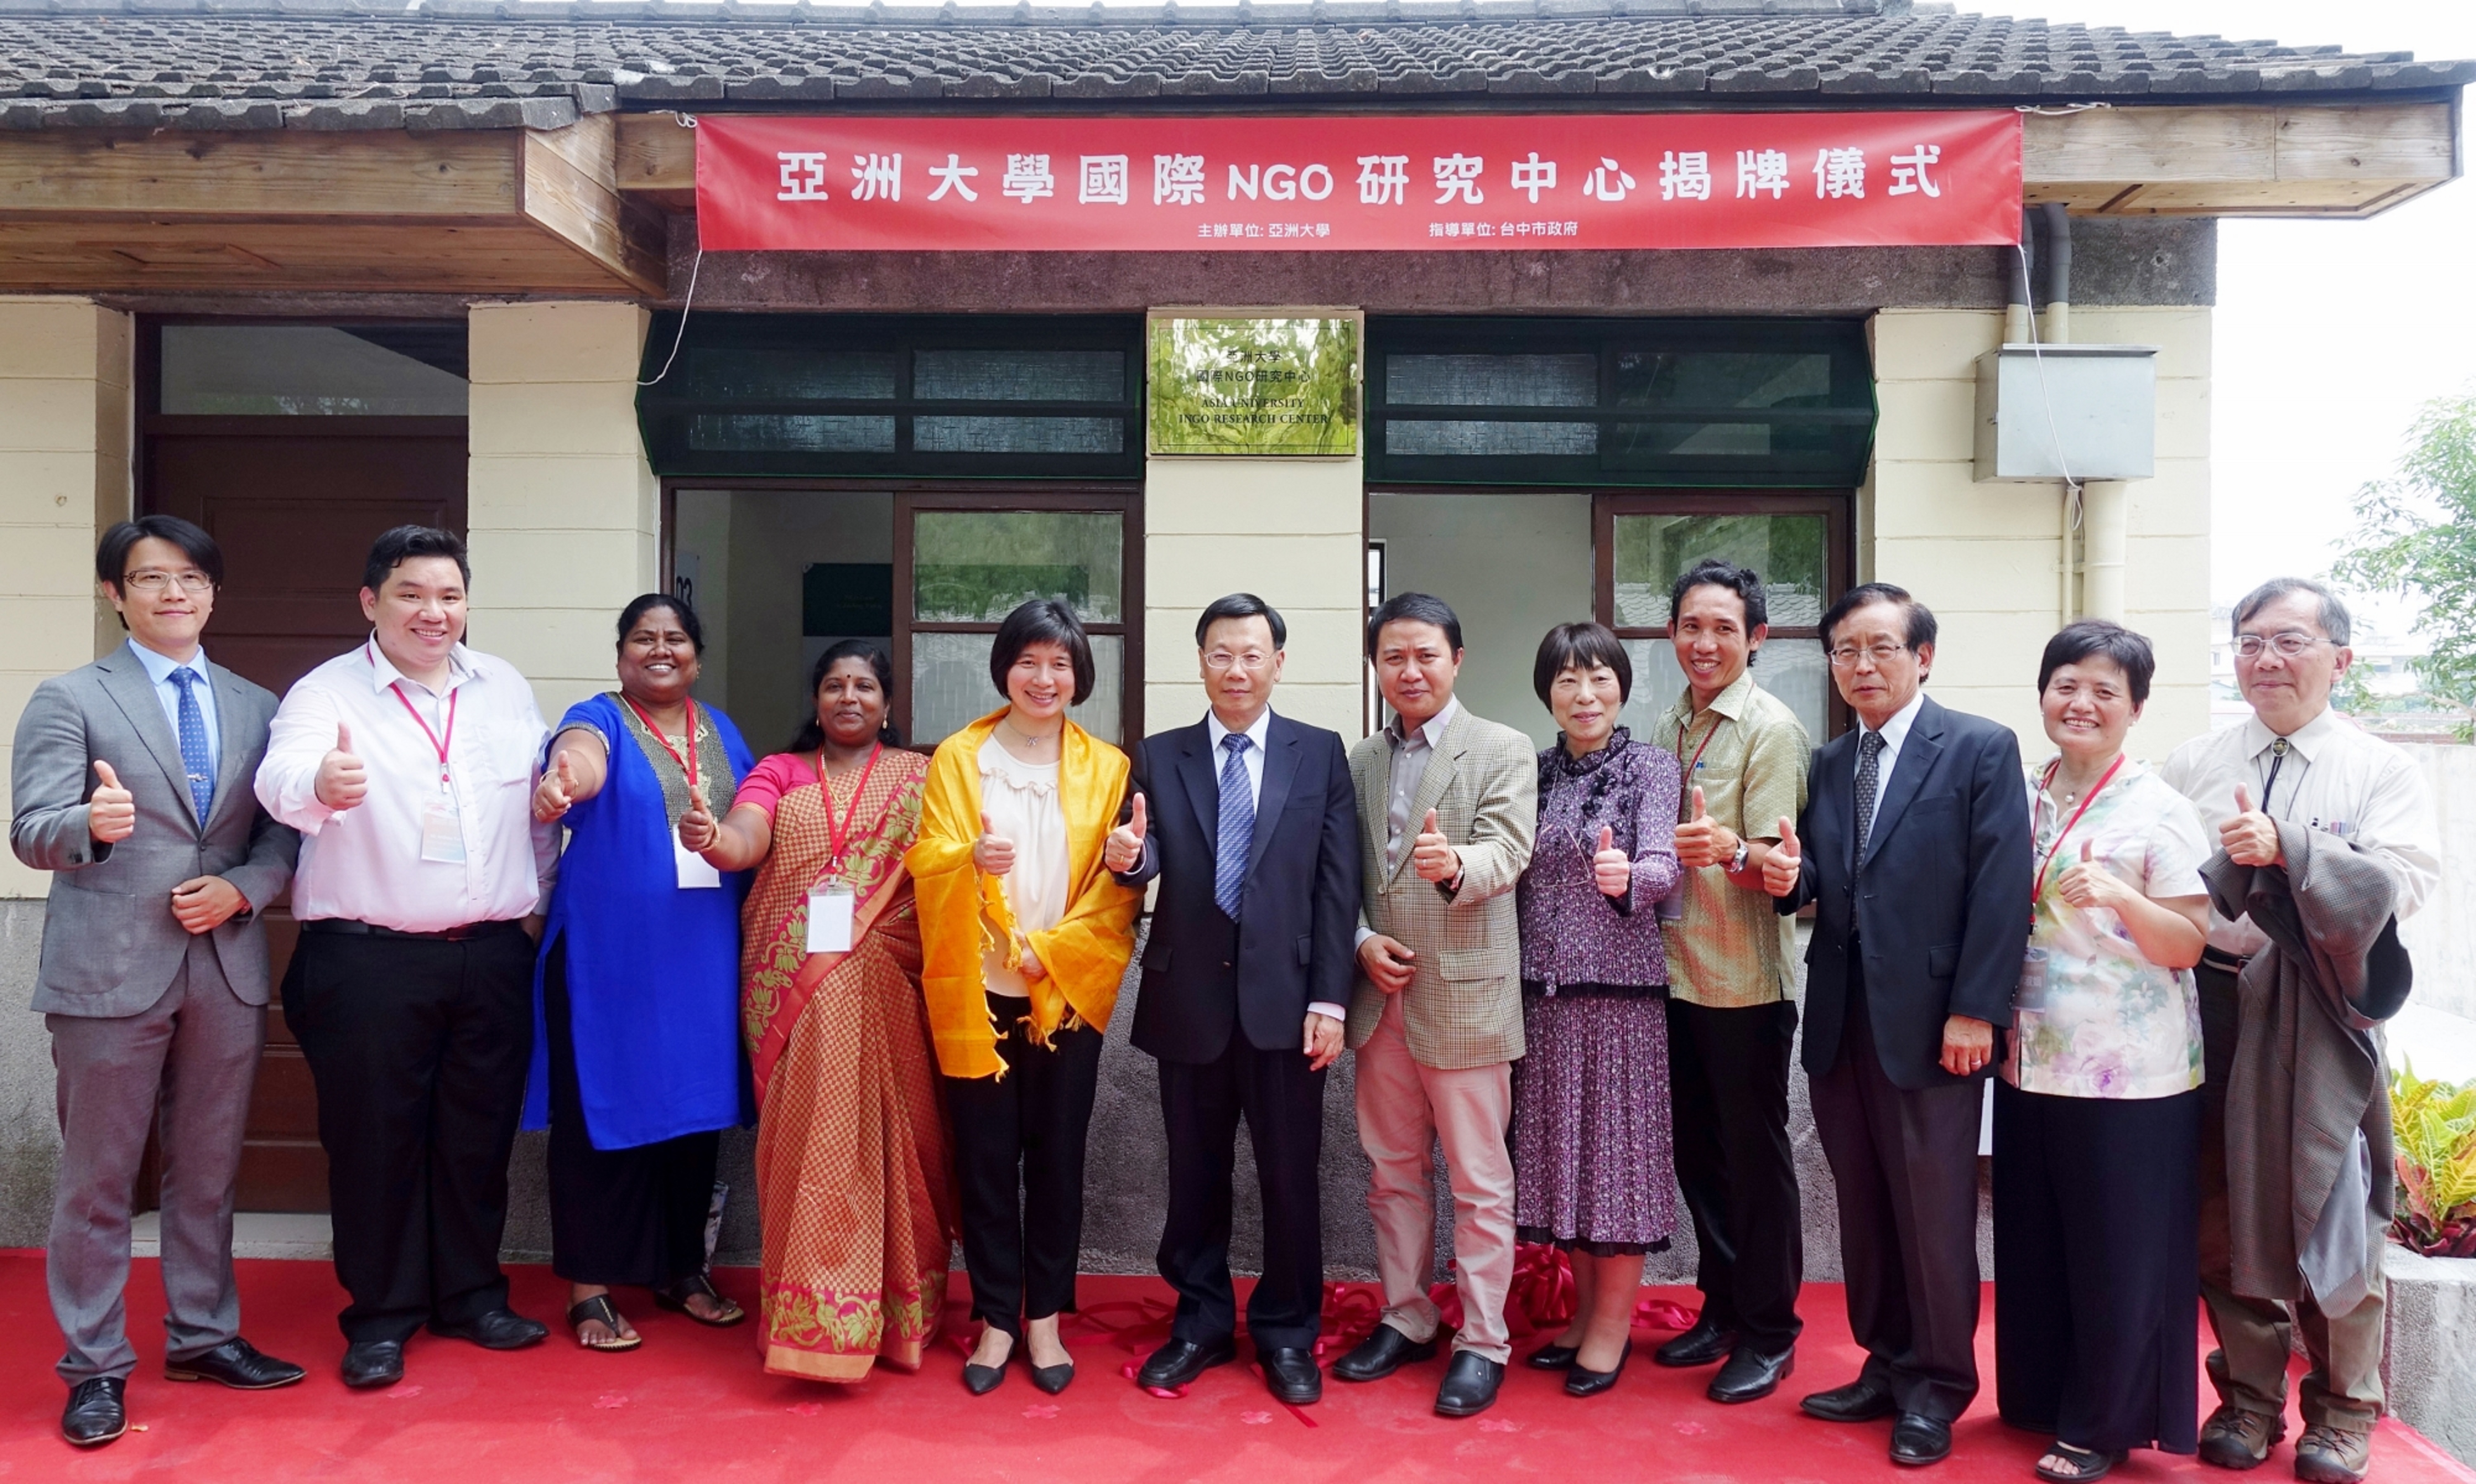 Grand Opening of the International NGO Center of Asia Univ. 